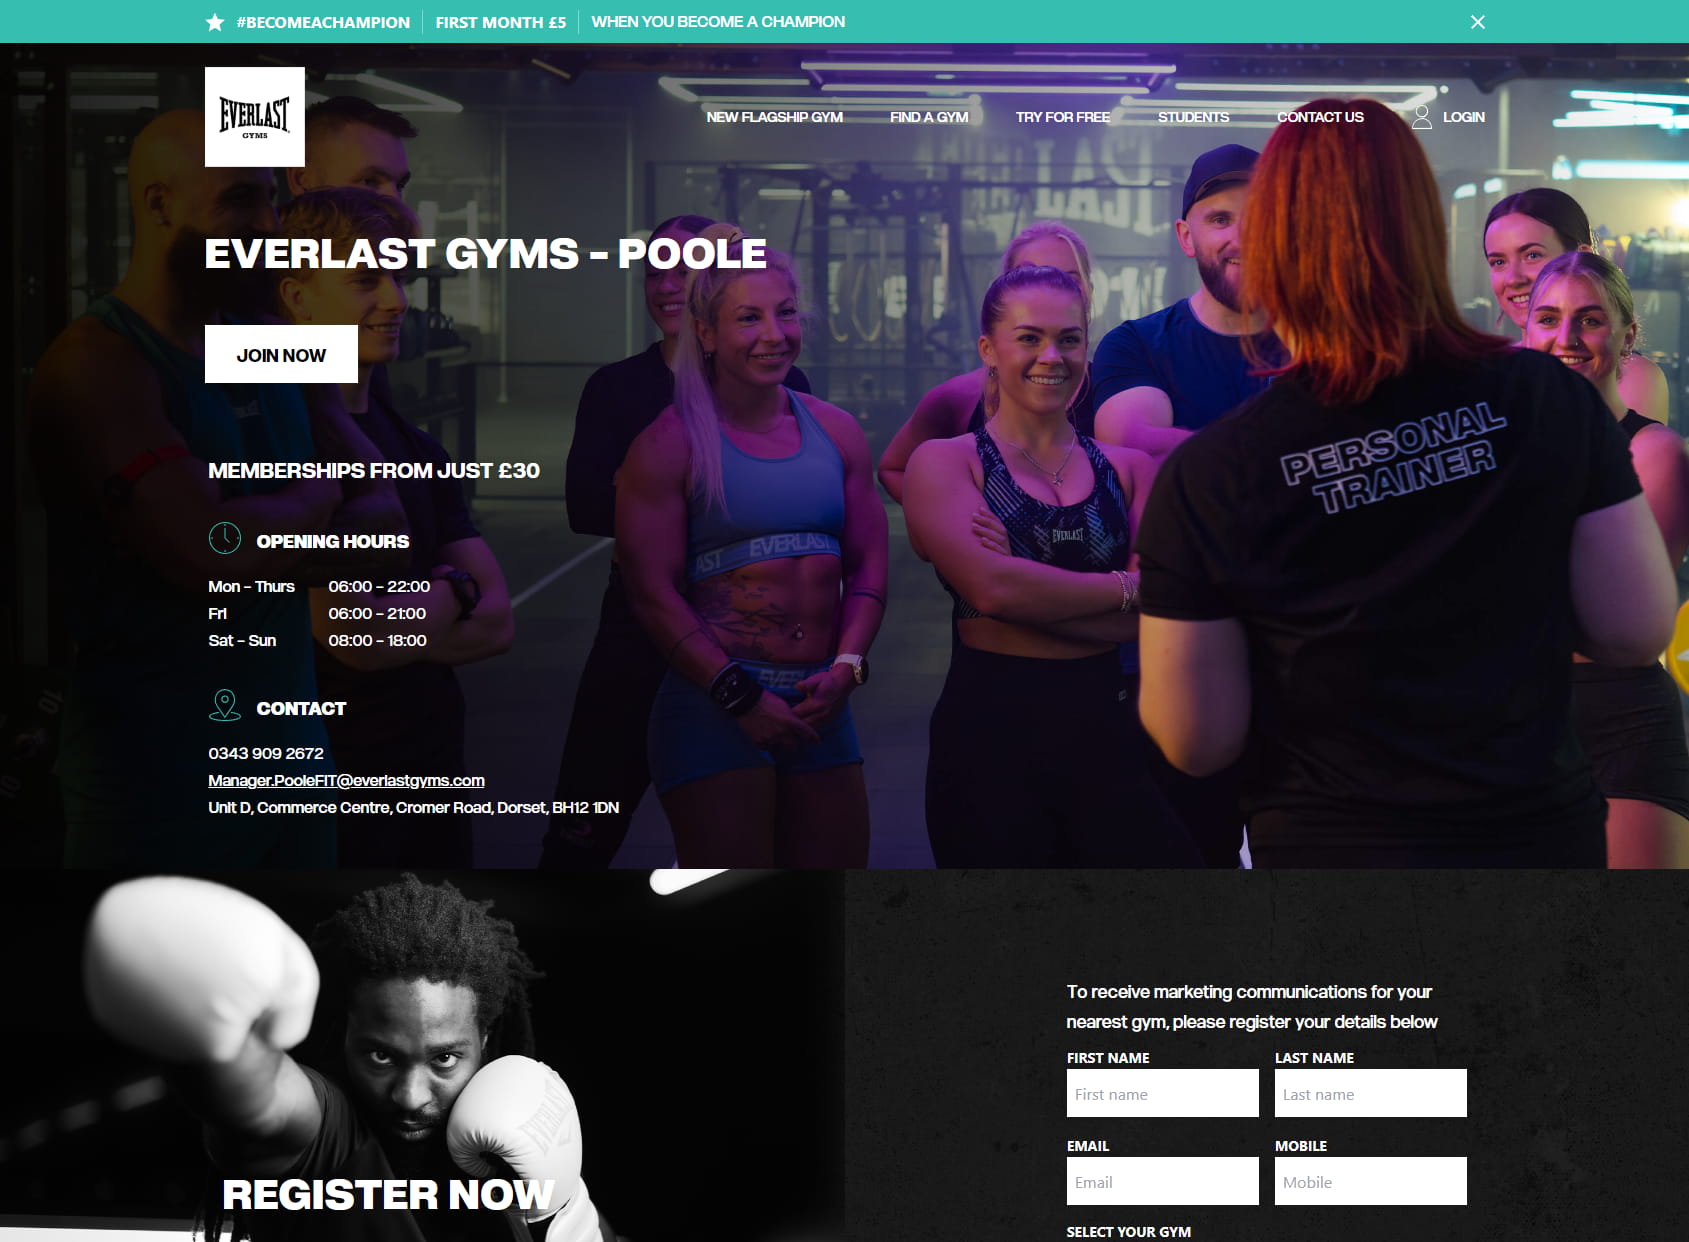 Everlast Gyms - Poole